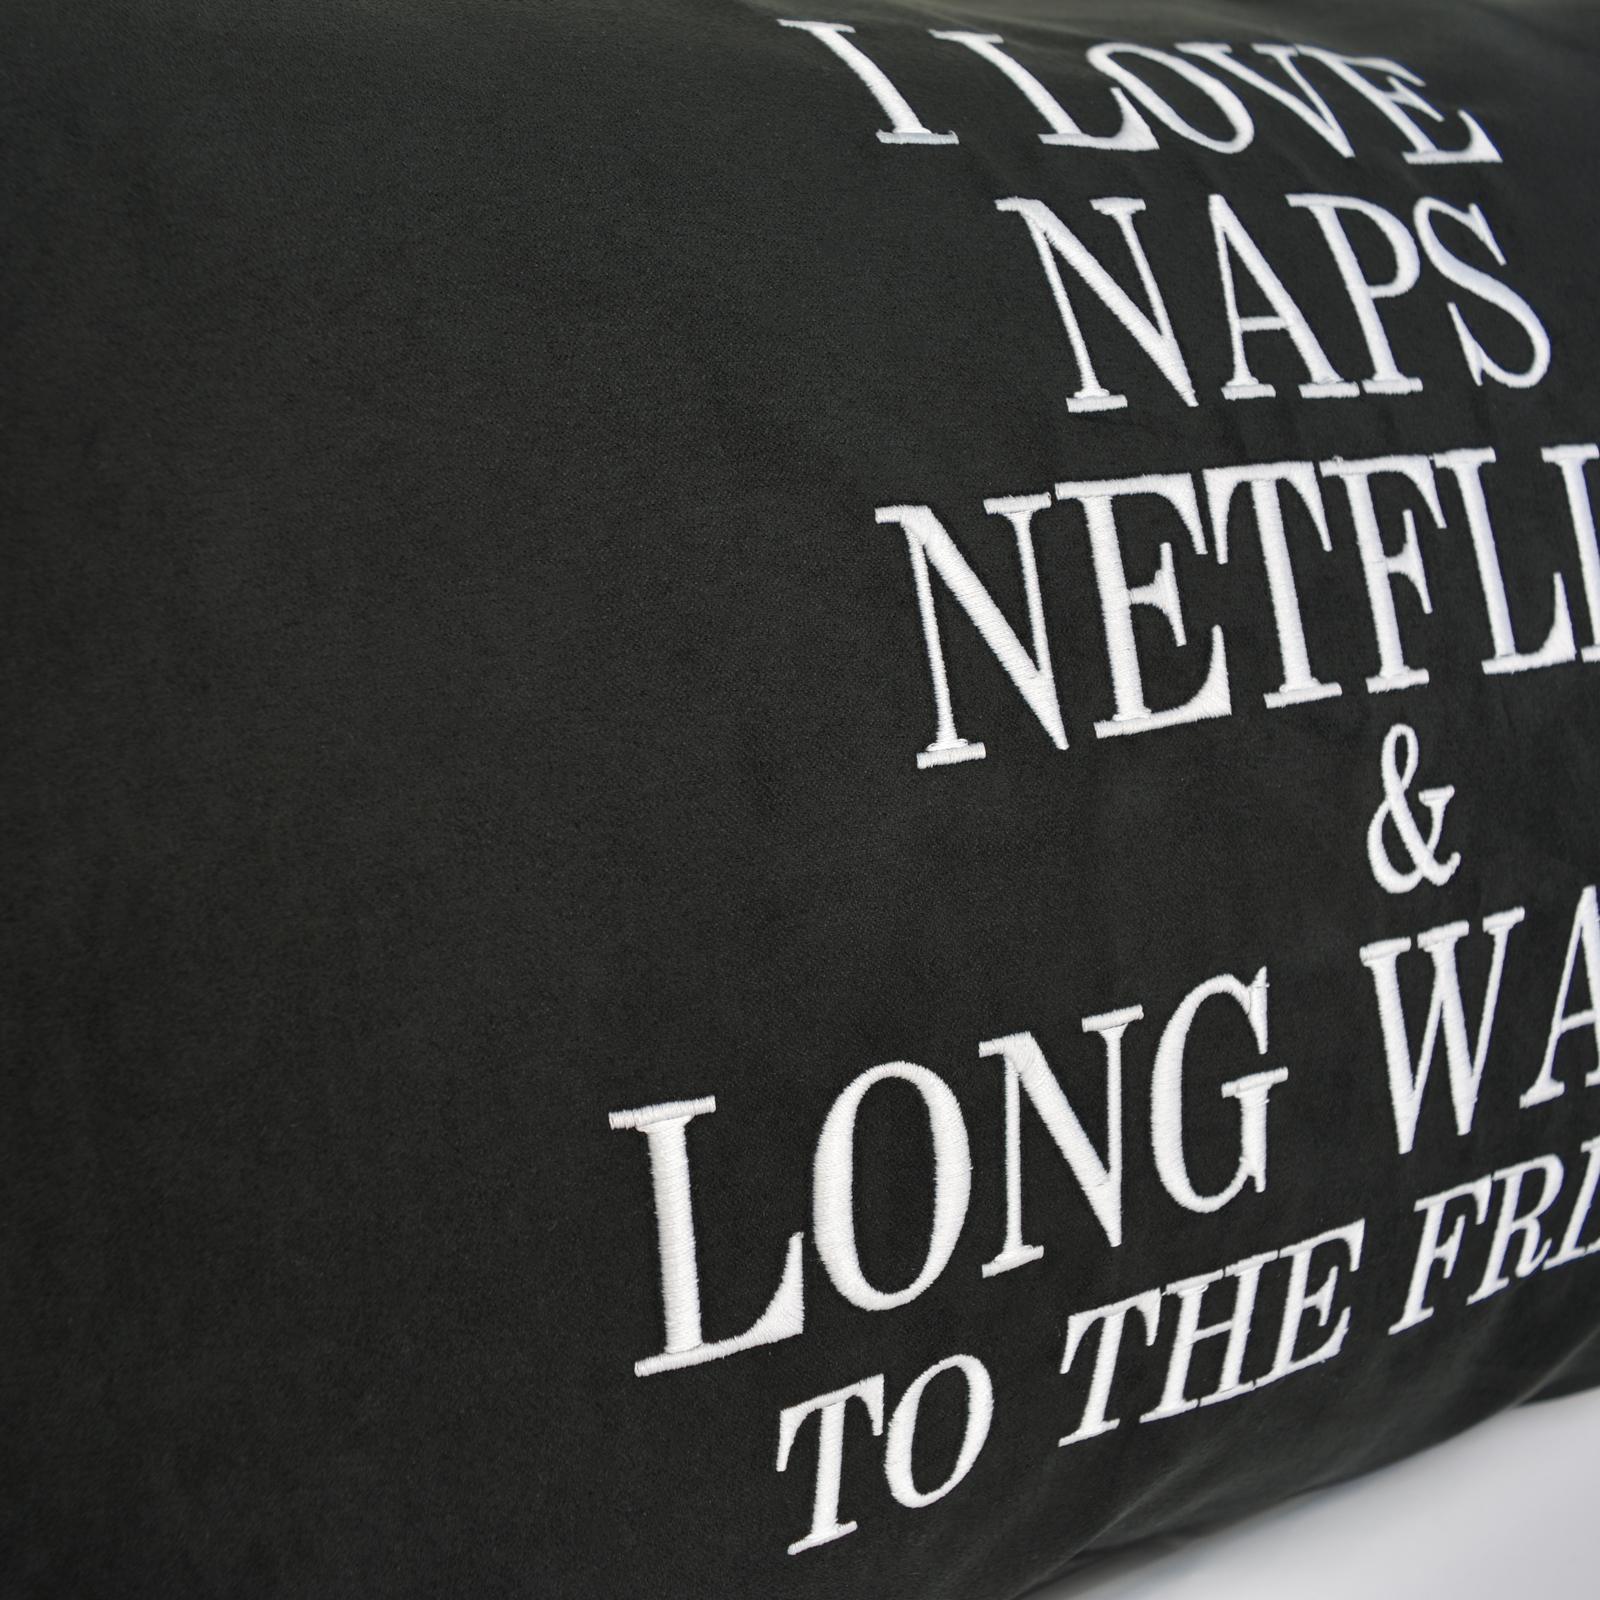 I love naps Netflix & long walks to the fridge